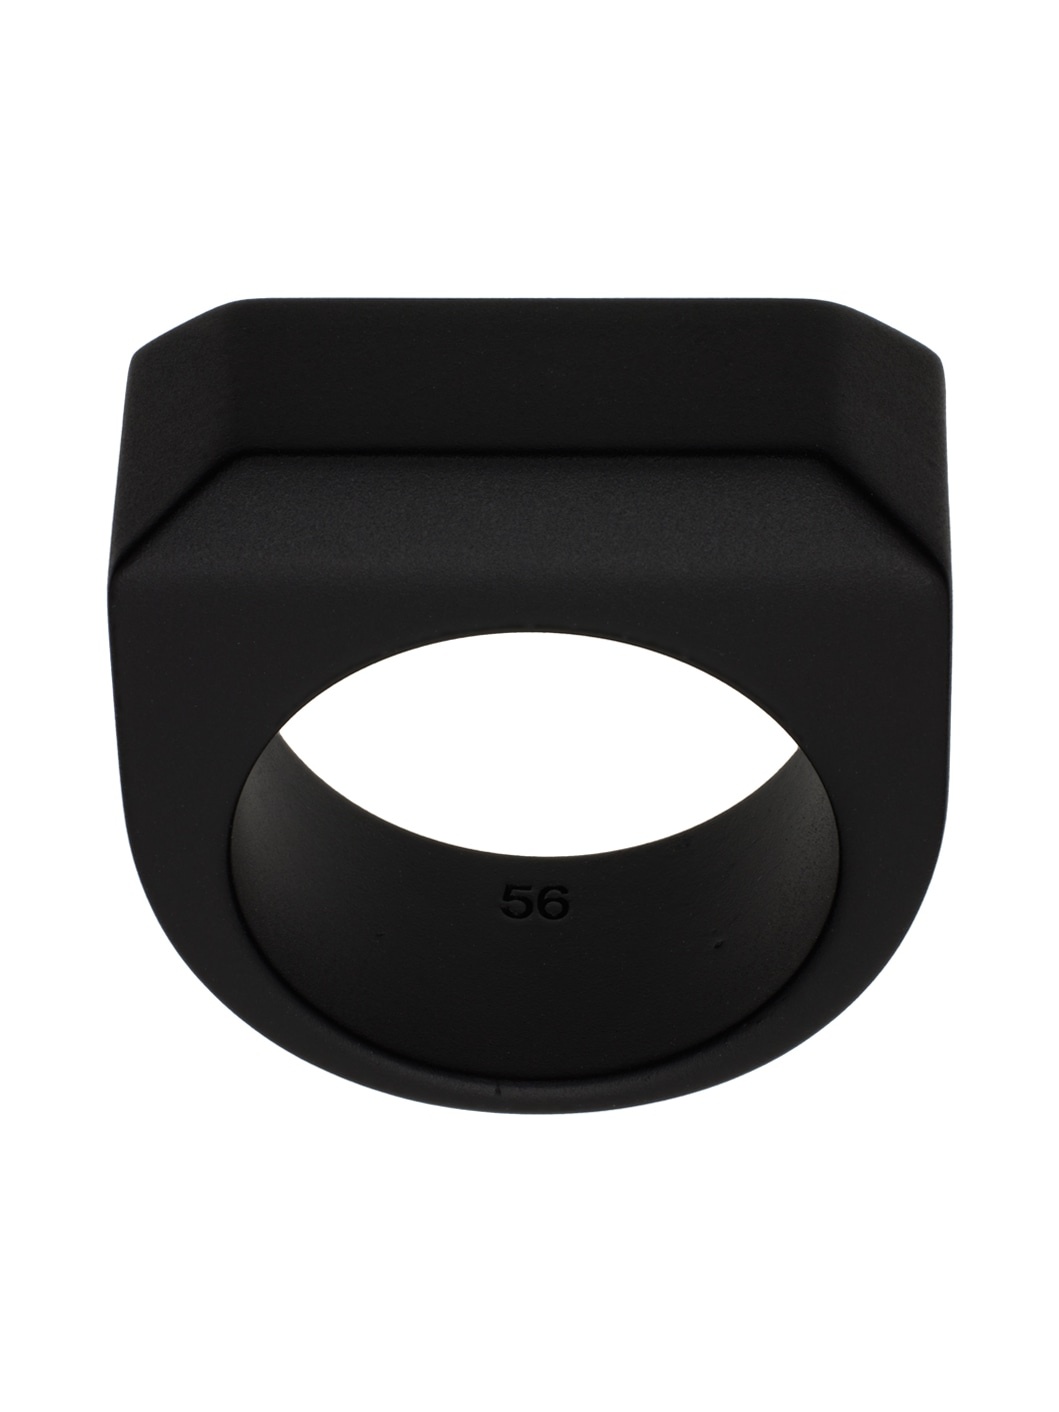 Black Beveled Ring - 1